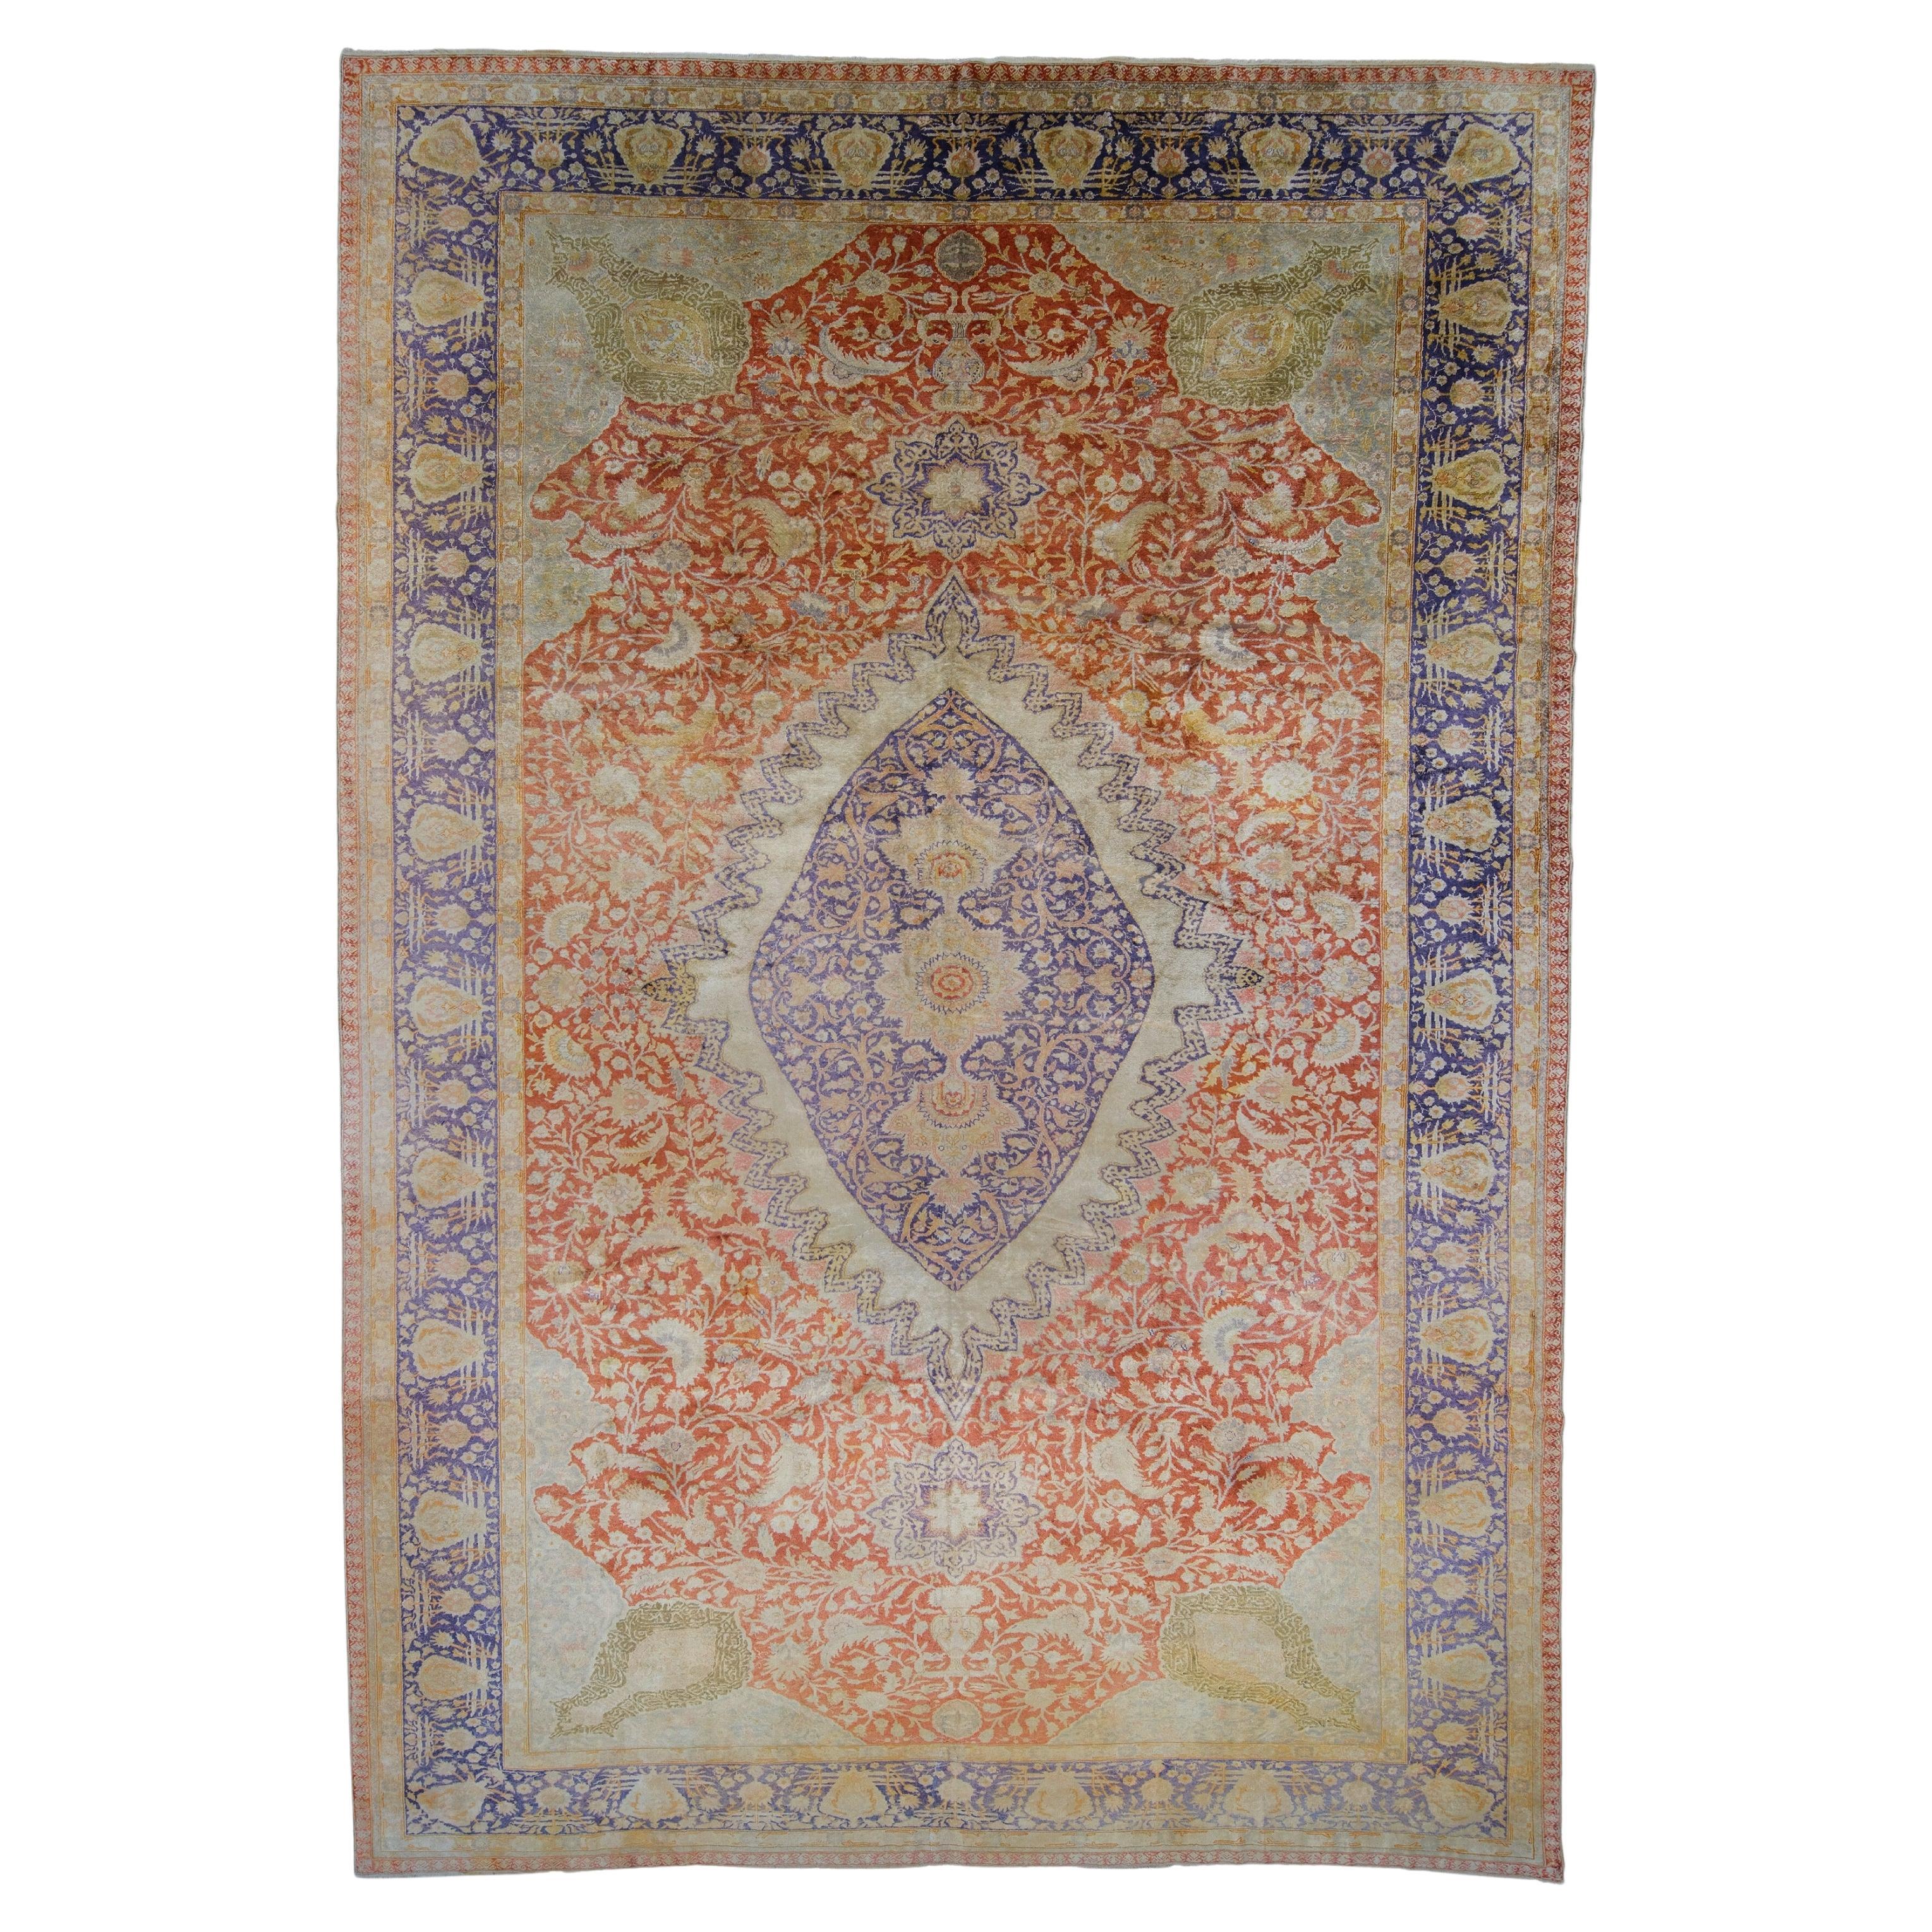 Antique Kayseri Silk Carpet - 20th Century Kayseri Silk Carpet, Antique Rug For Sale